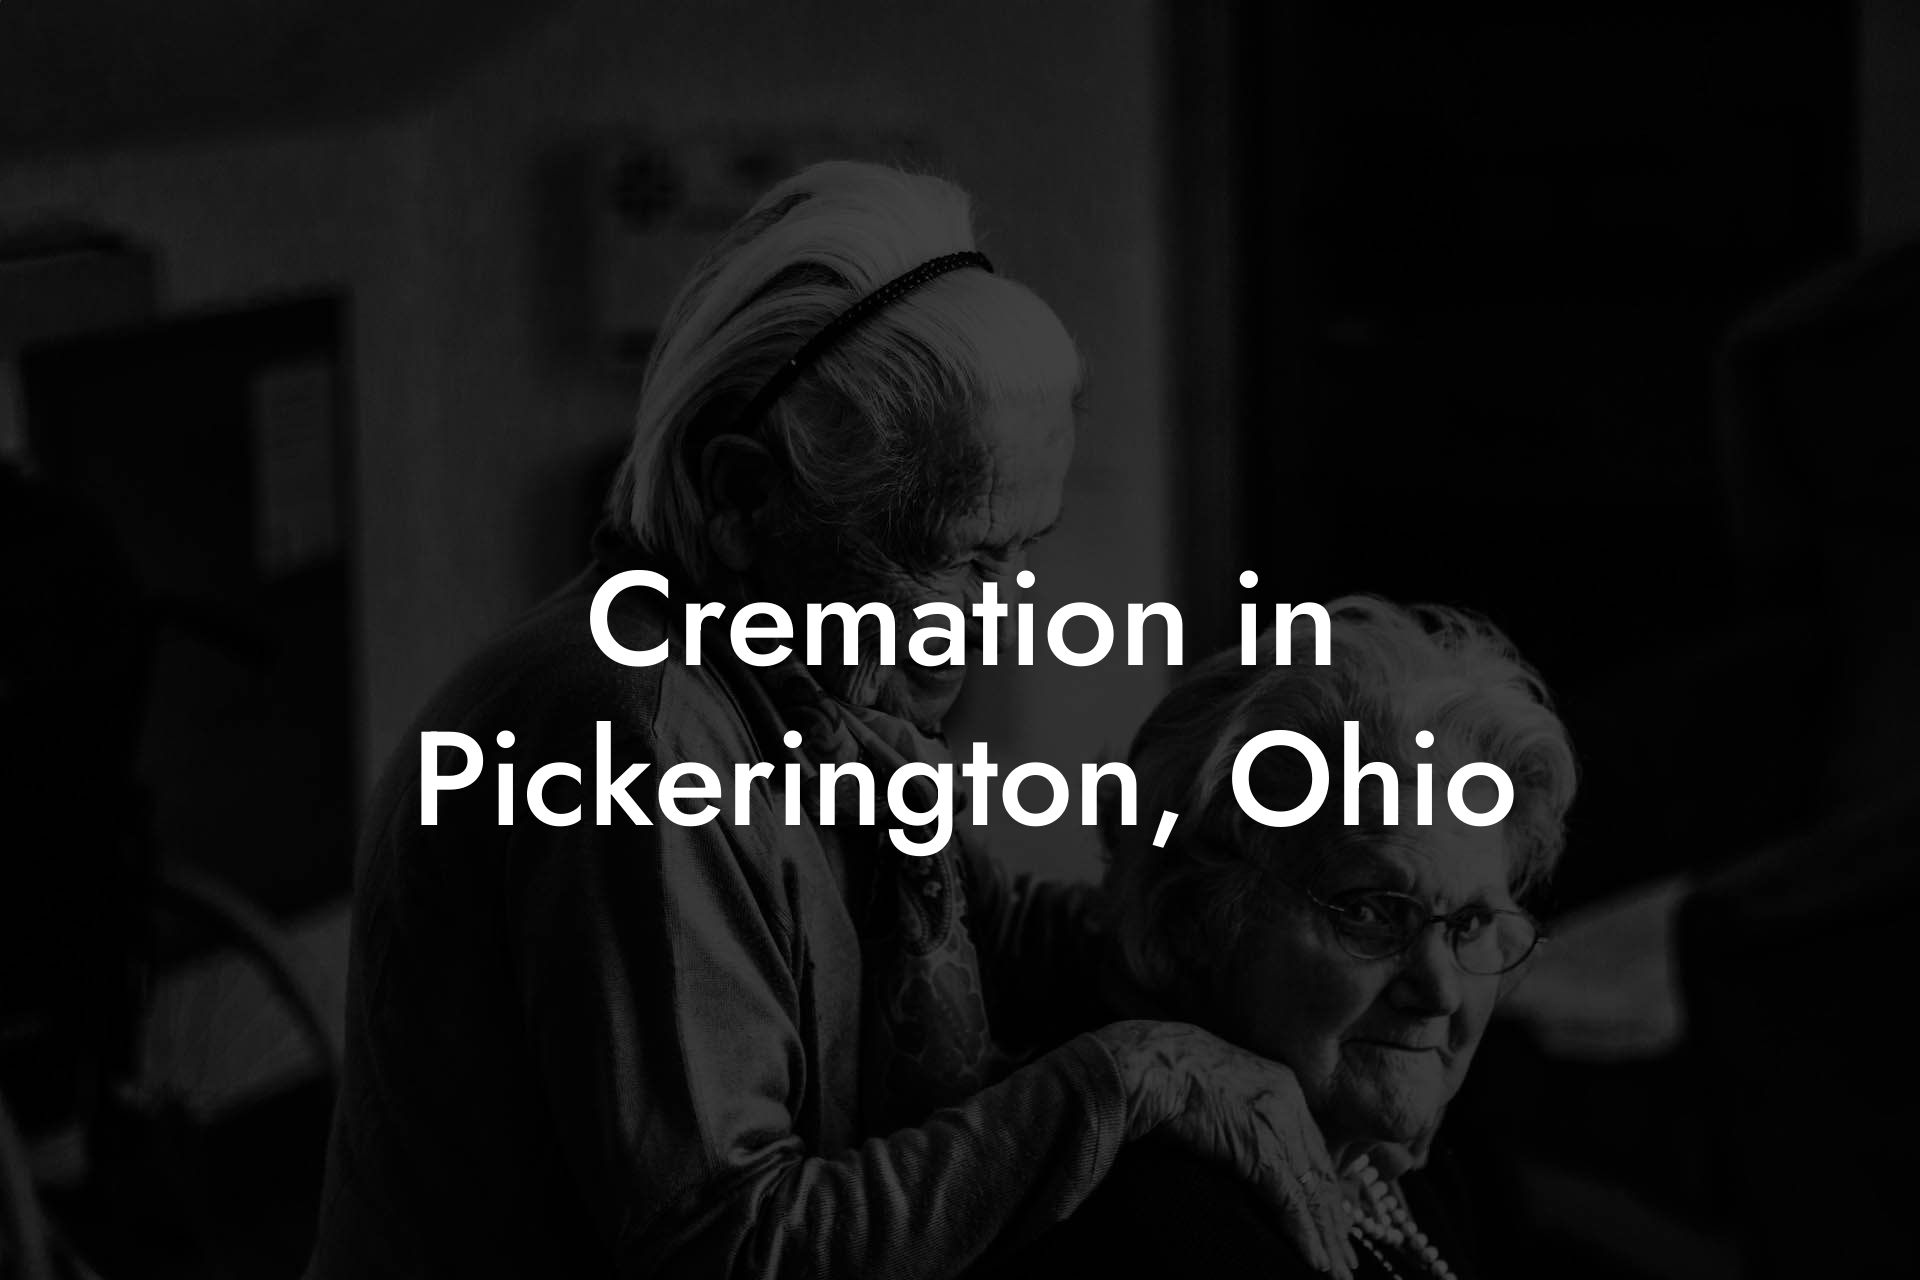 Cremation in Pickerington, Ohio